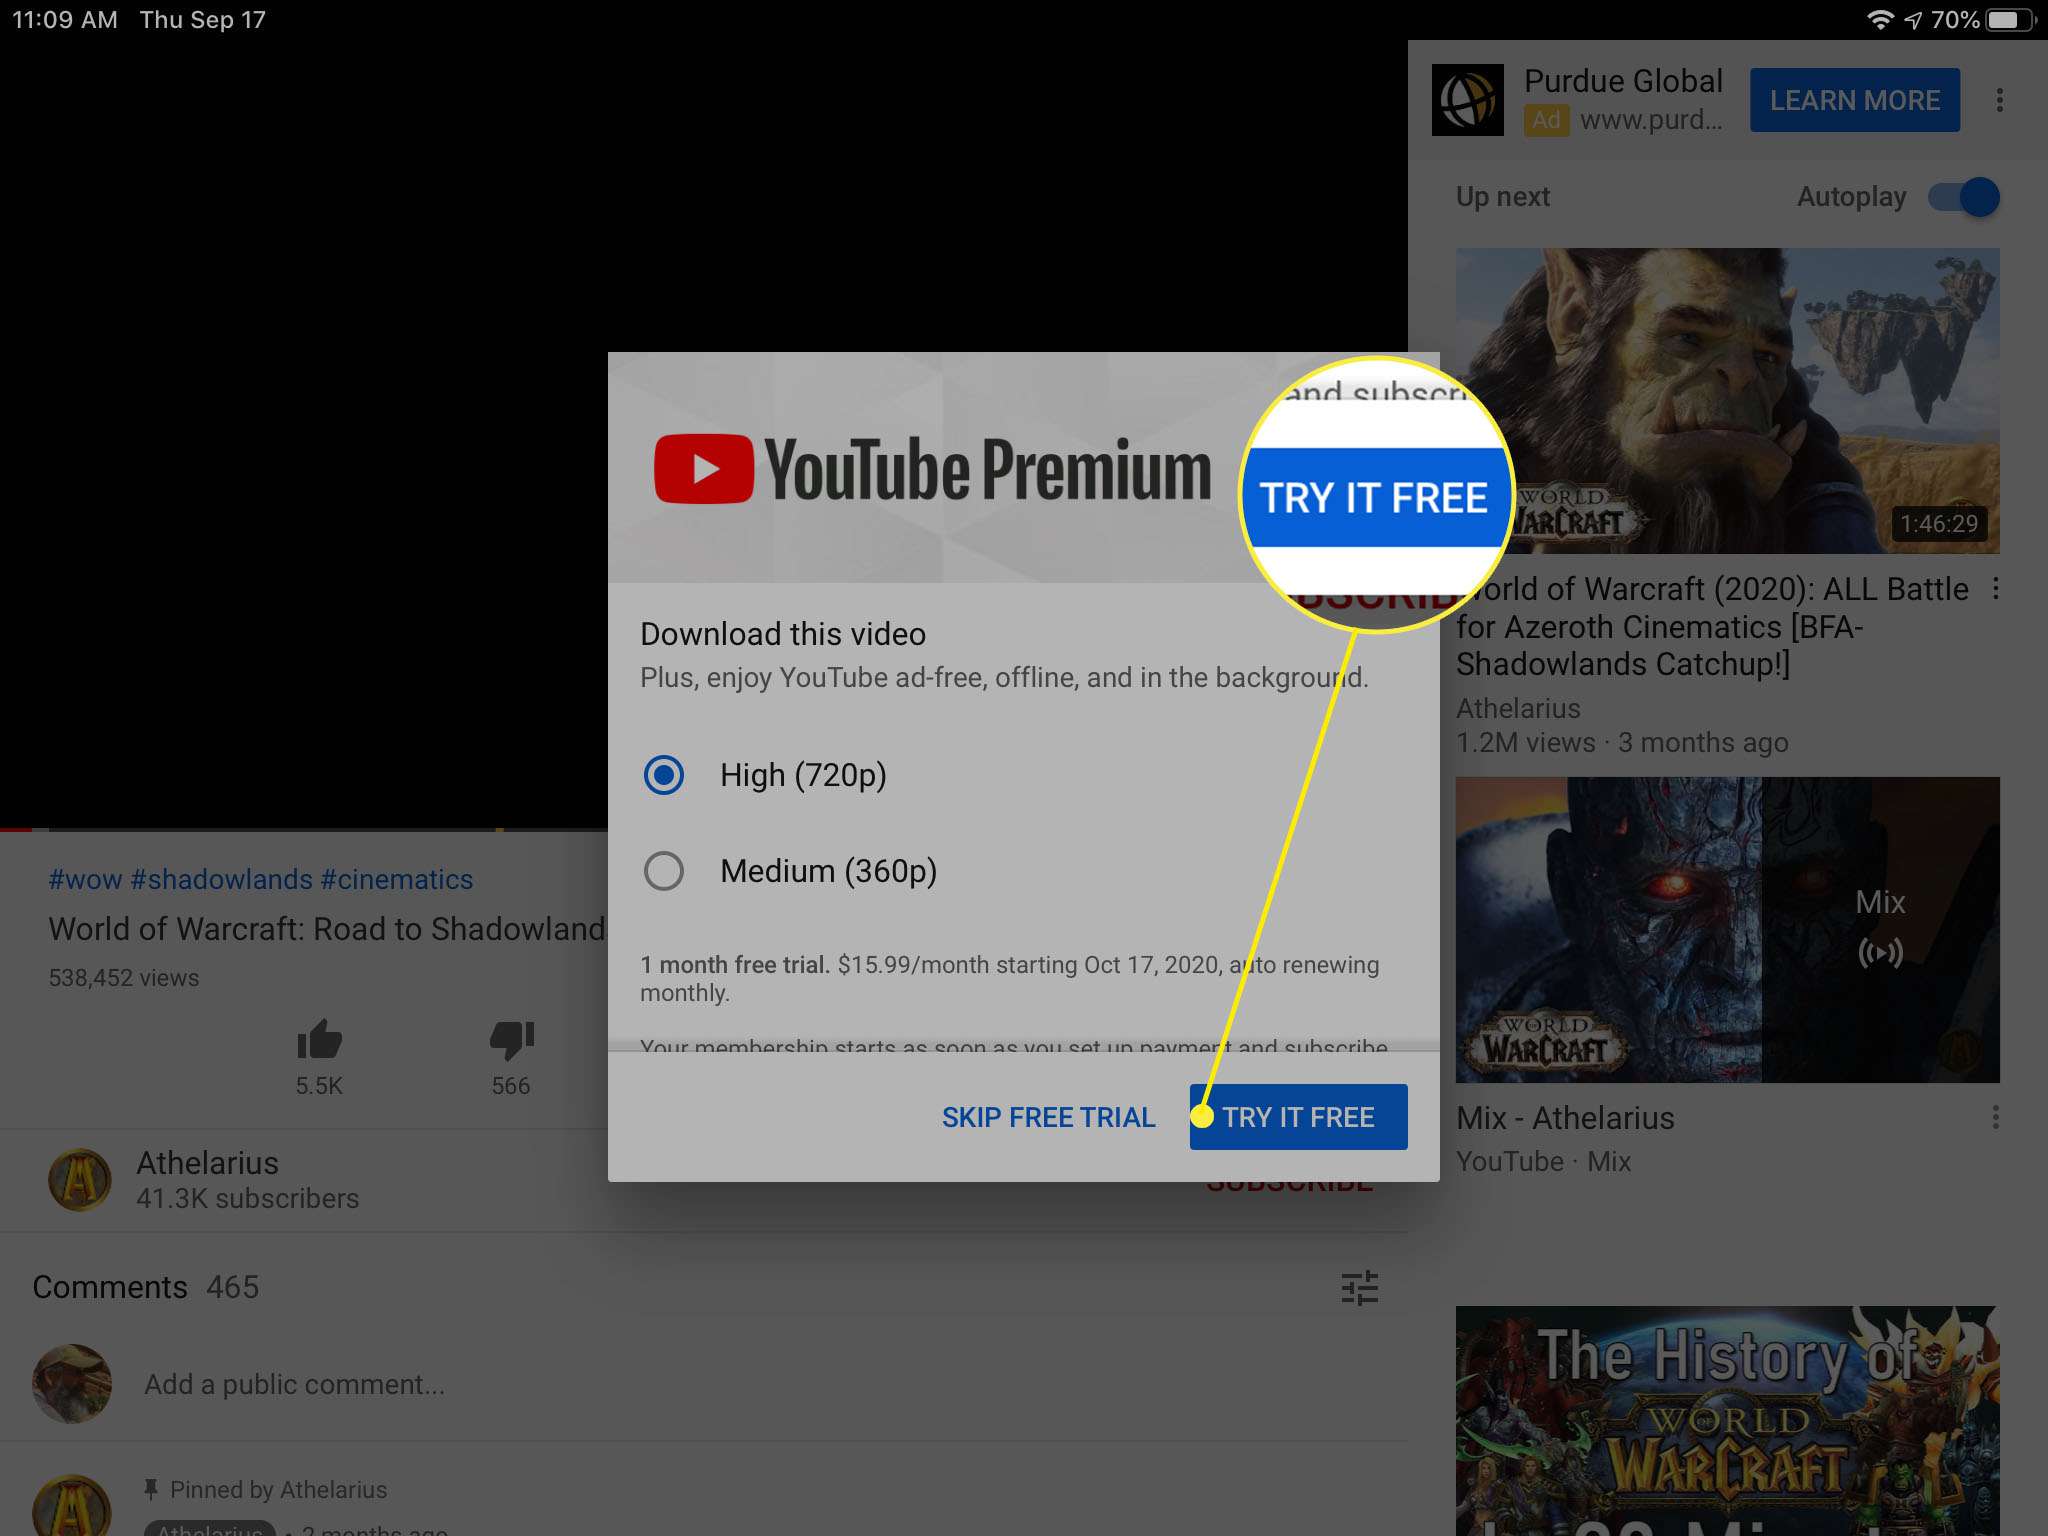 Selecionando Testar gratuitamente no YouTube Premium.